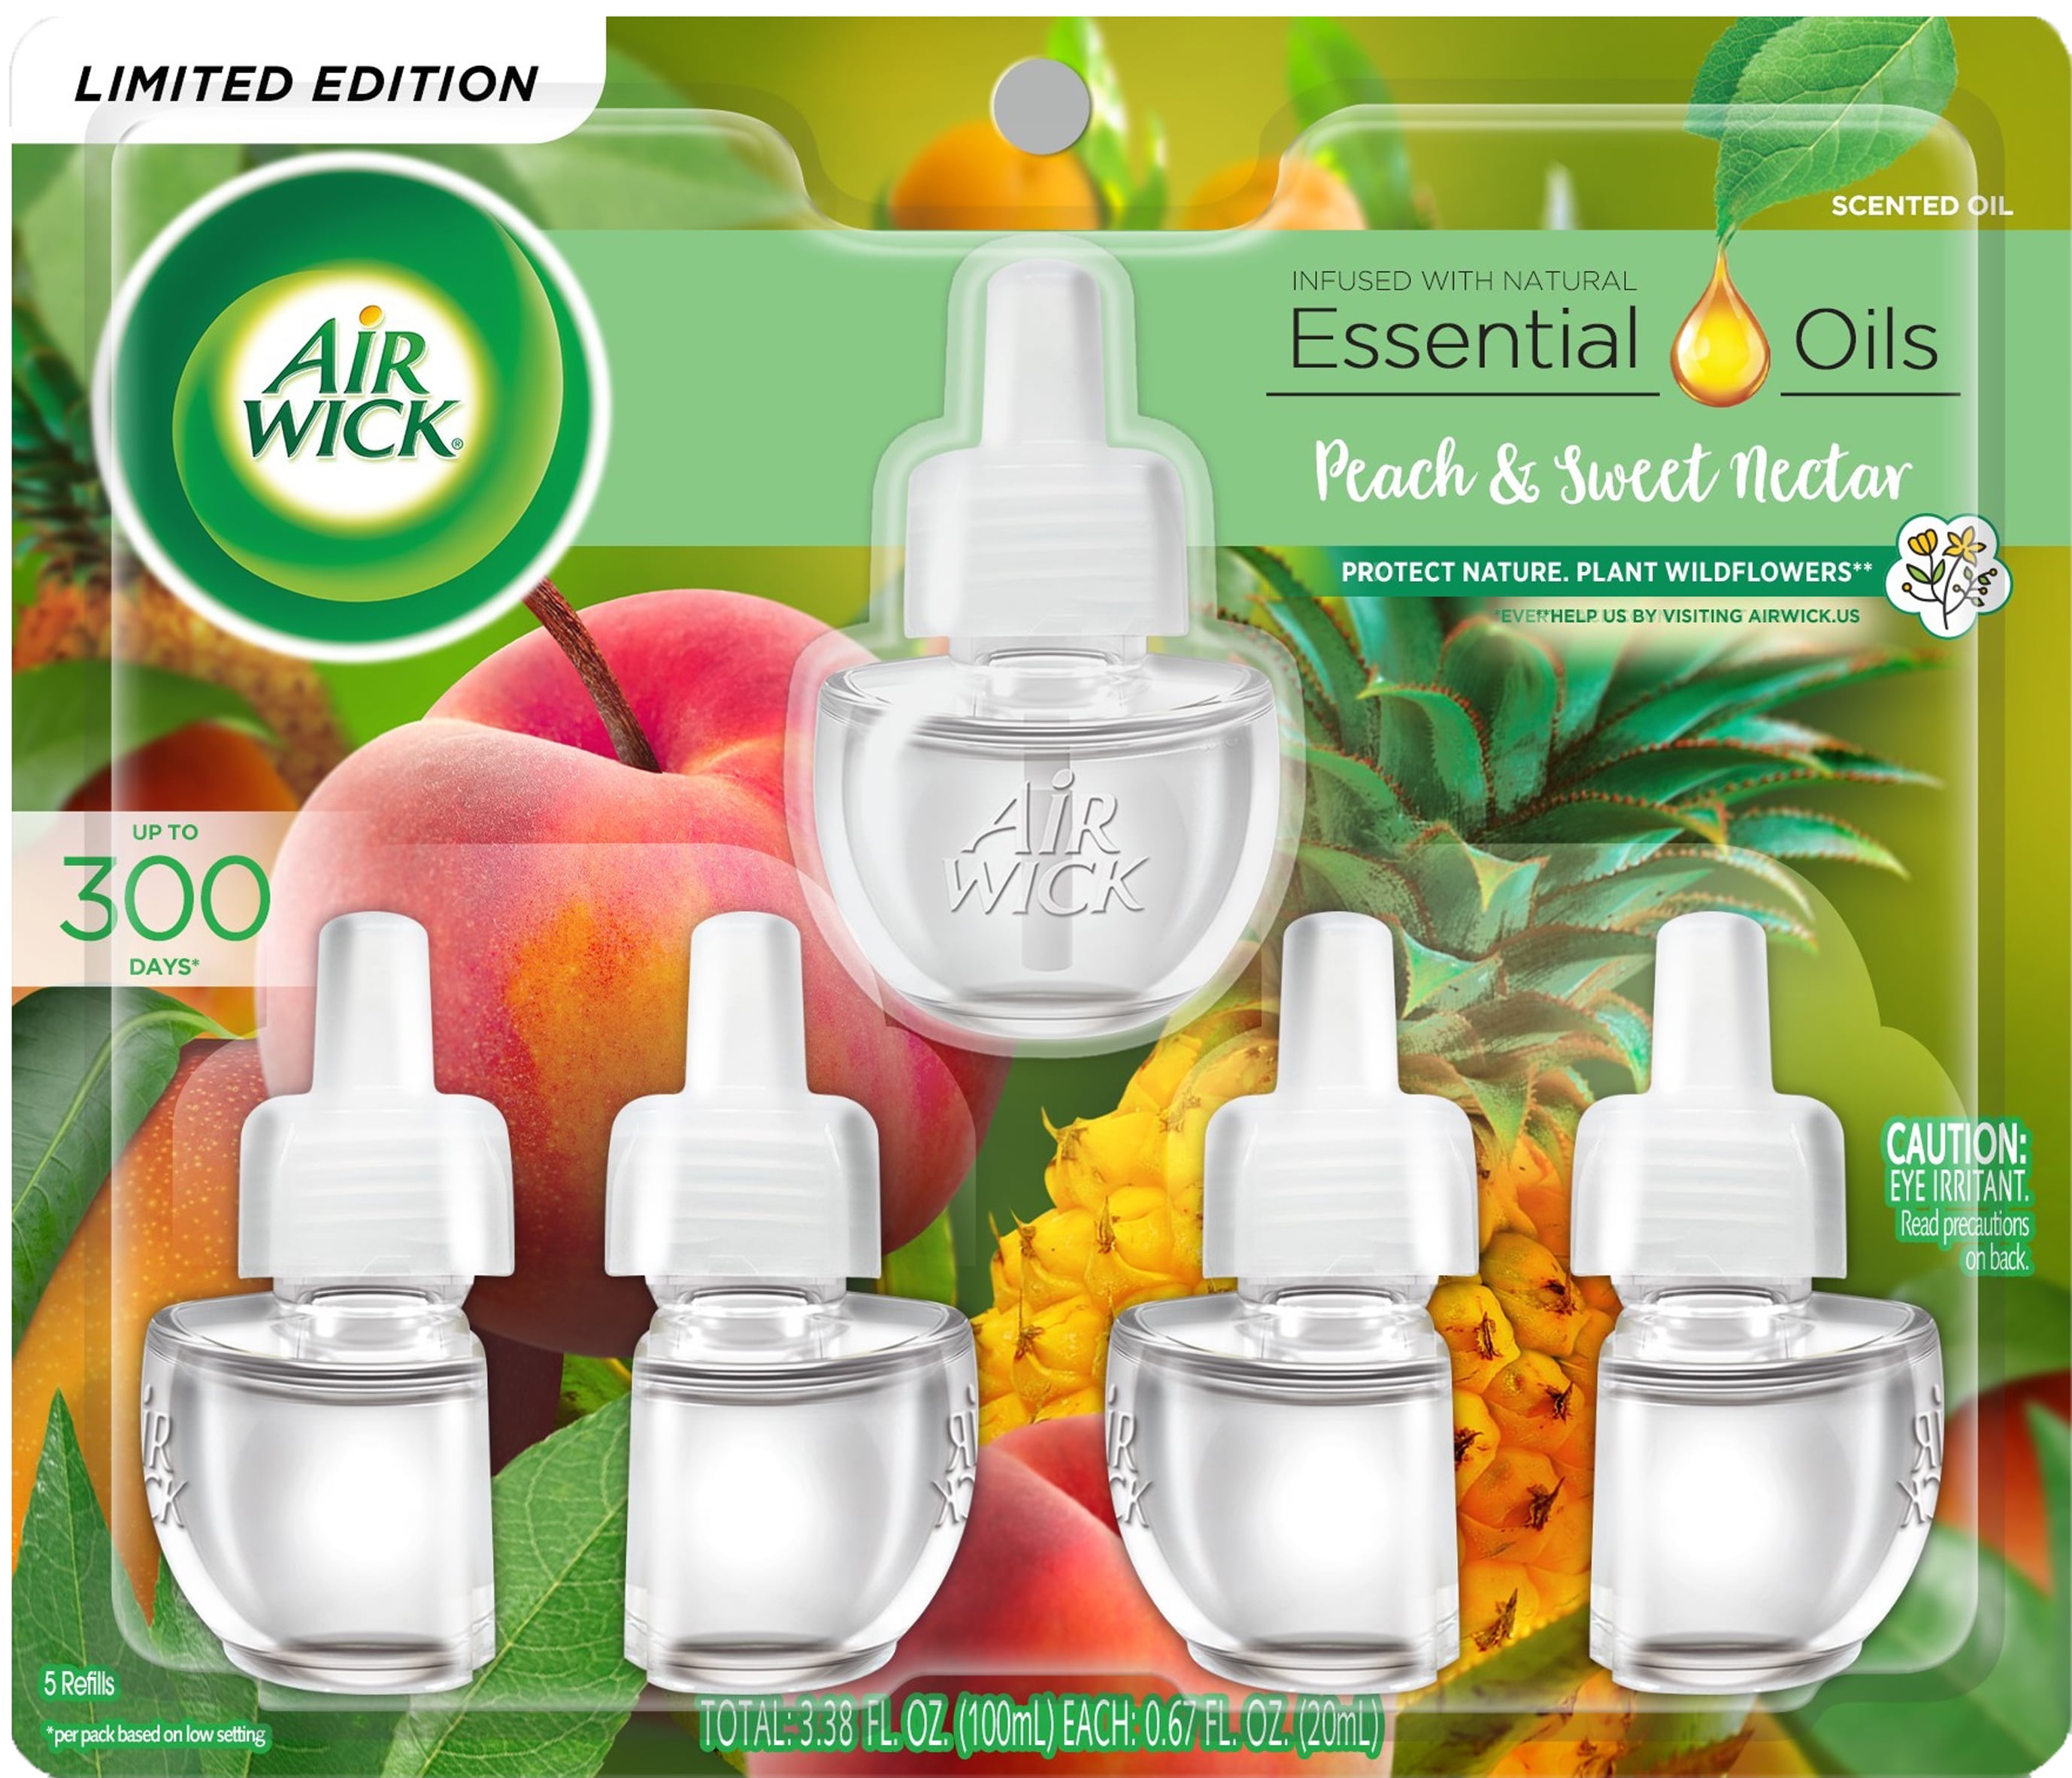 Air Wick Essential Oils Scented Oil Refills, Peach & Sweet Nectar - 2 refills, 1.34 fl oz